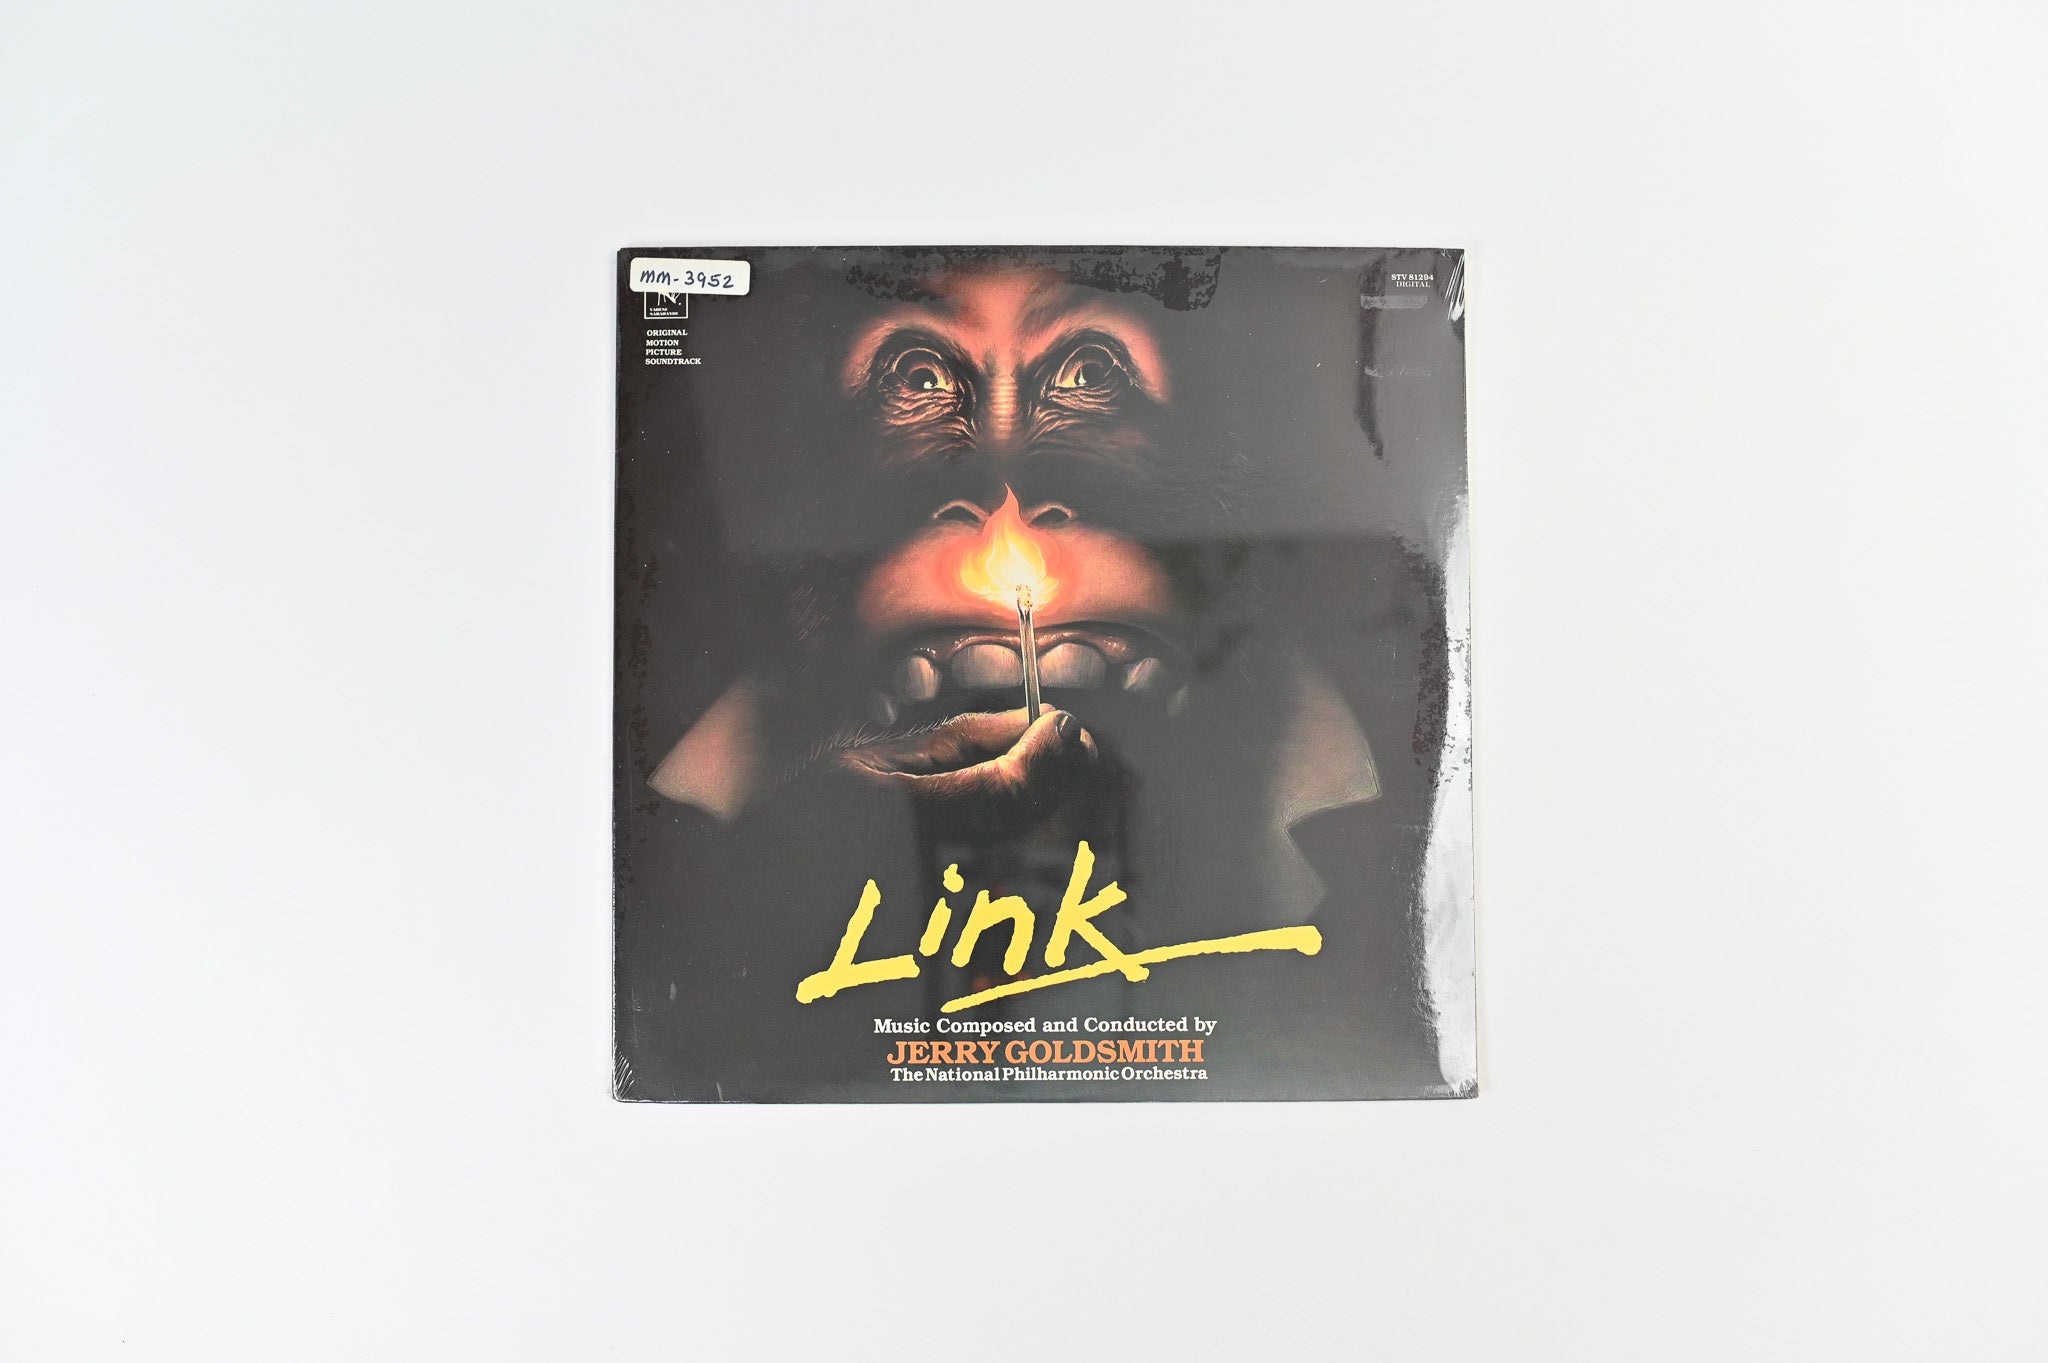 Jerry Goldsmith - Link (Original Motion Picture Soundtrack) on Varese Sarabande Sealed